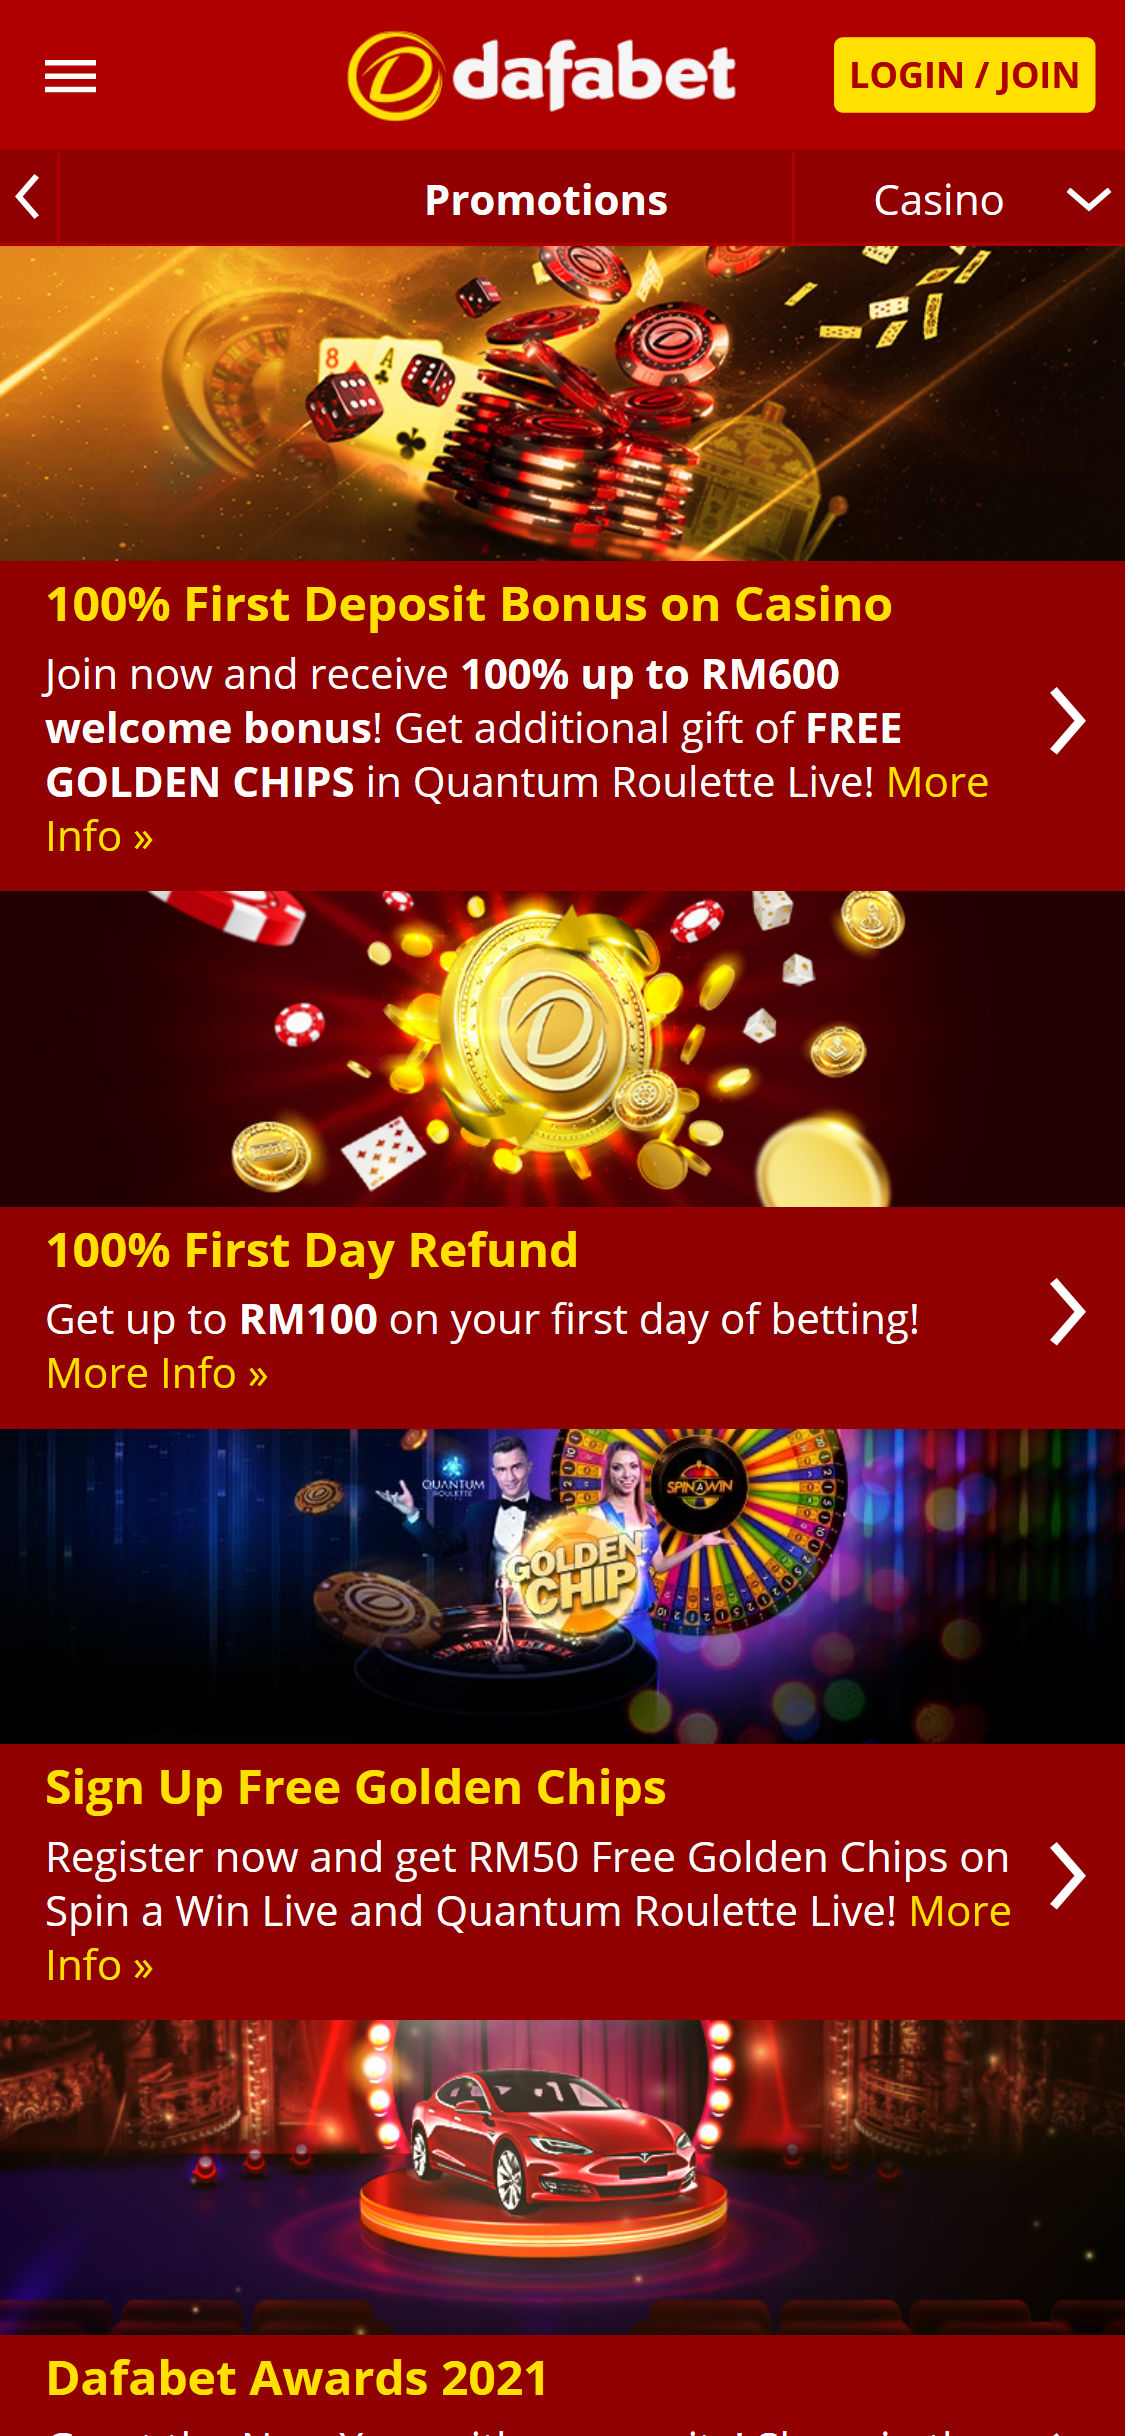 Dafabet 888 Casino Mobile No Deposit Bonus Review